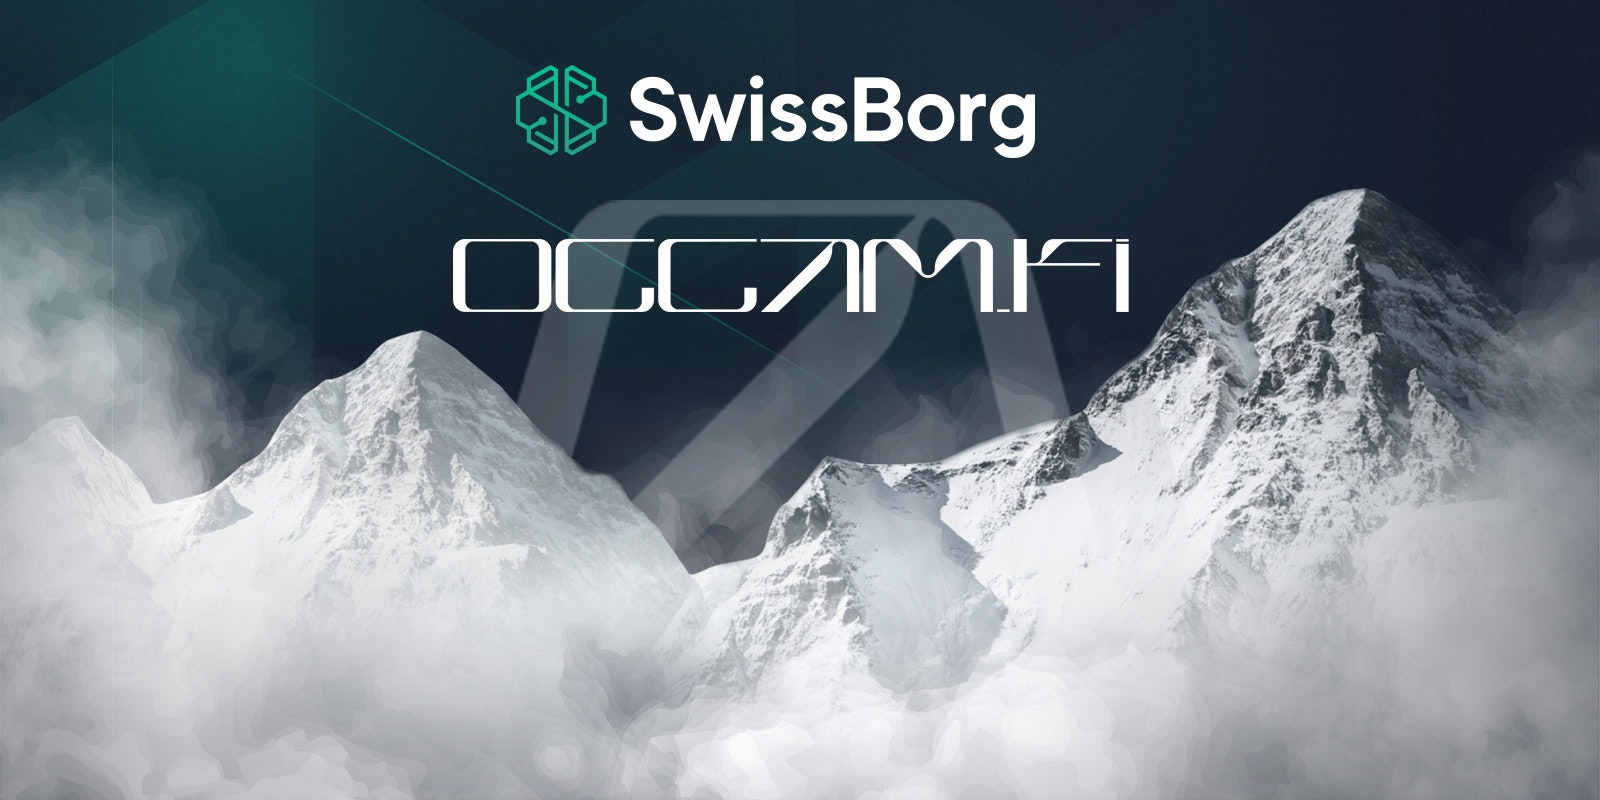 SwissBorg partners with Occam